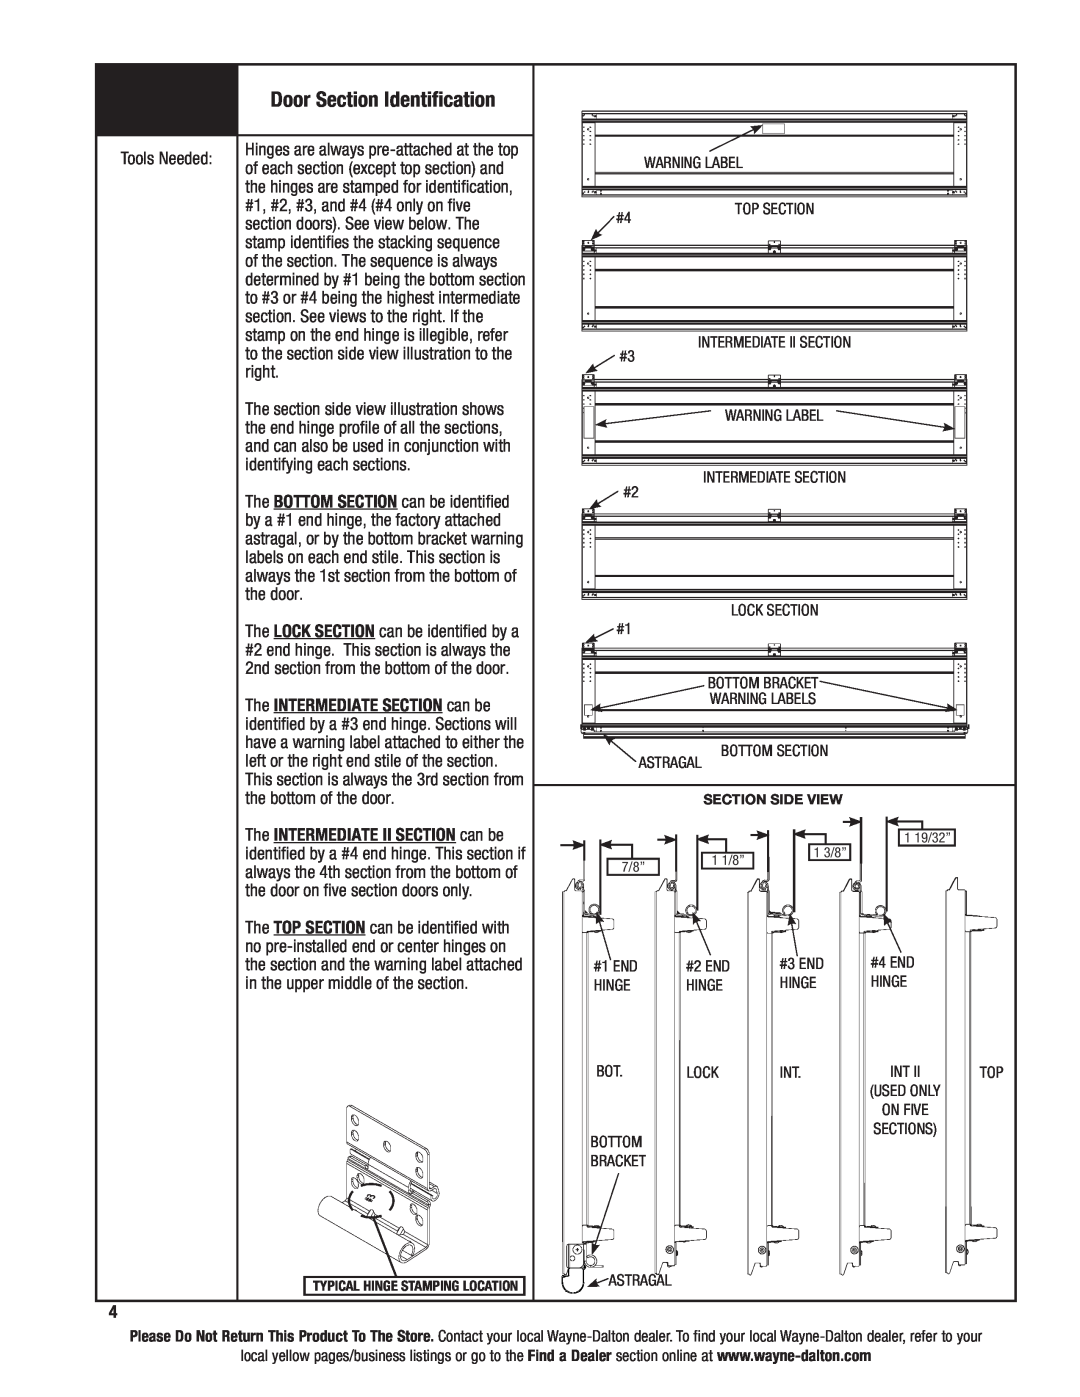 Wayne-Dalton 9100, 9400, 9600 installation instructions Door Section Identification 